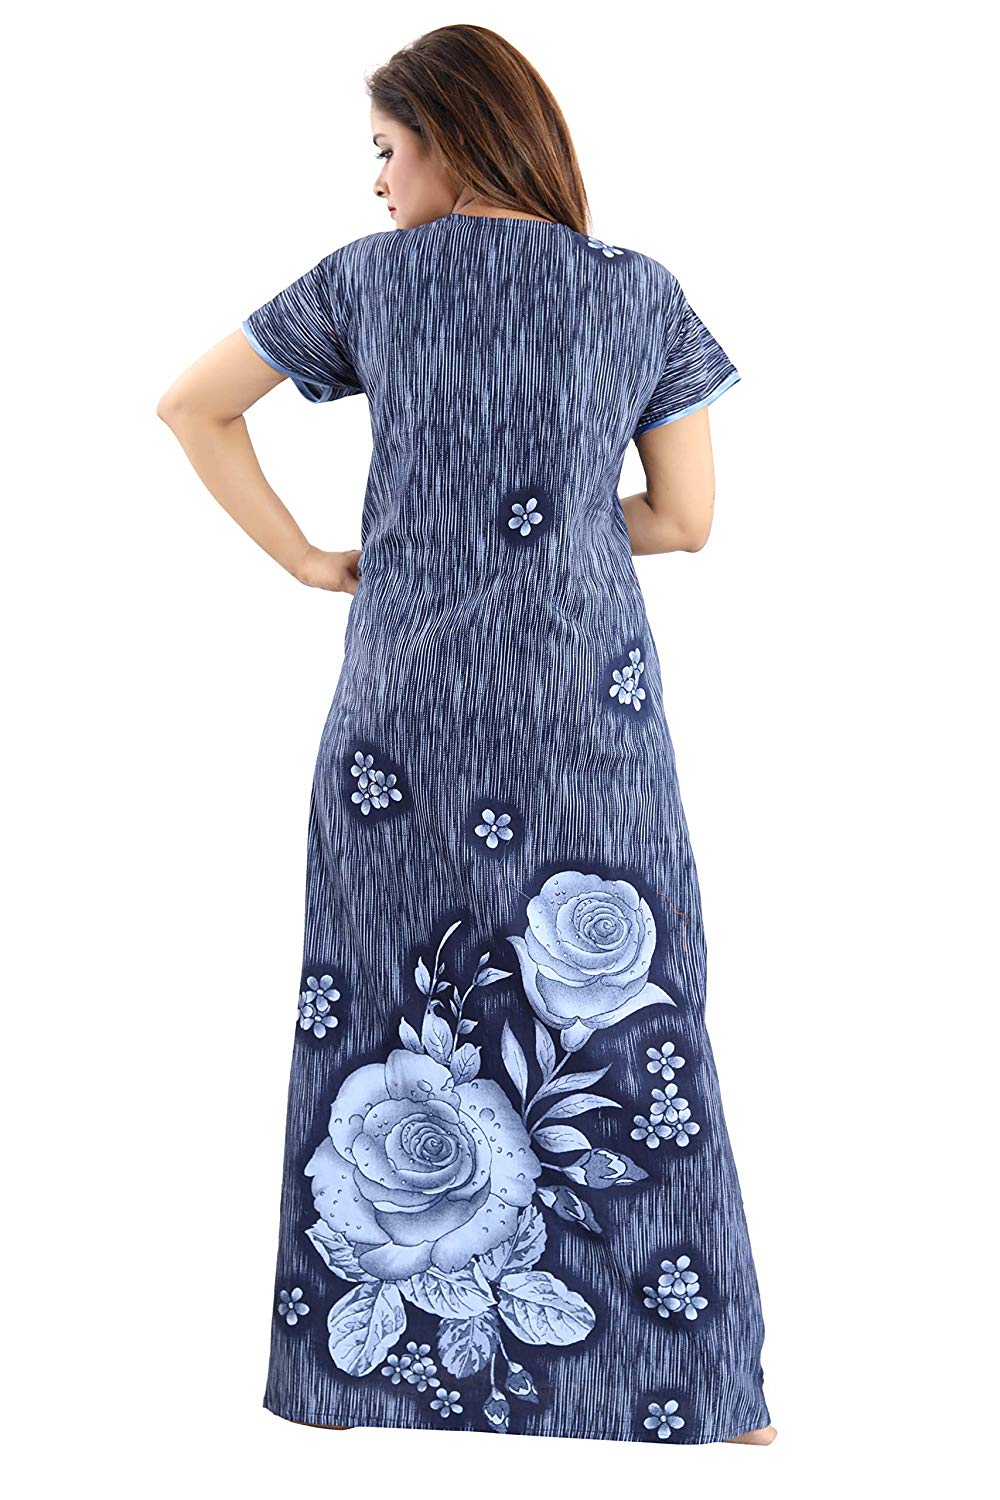 Moomaya Cotton Poplin Lace Border Sleepwear Women Solid Short Sleeve  Nightdress Dark Navy Blue at Amazon Women's Clothing store